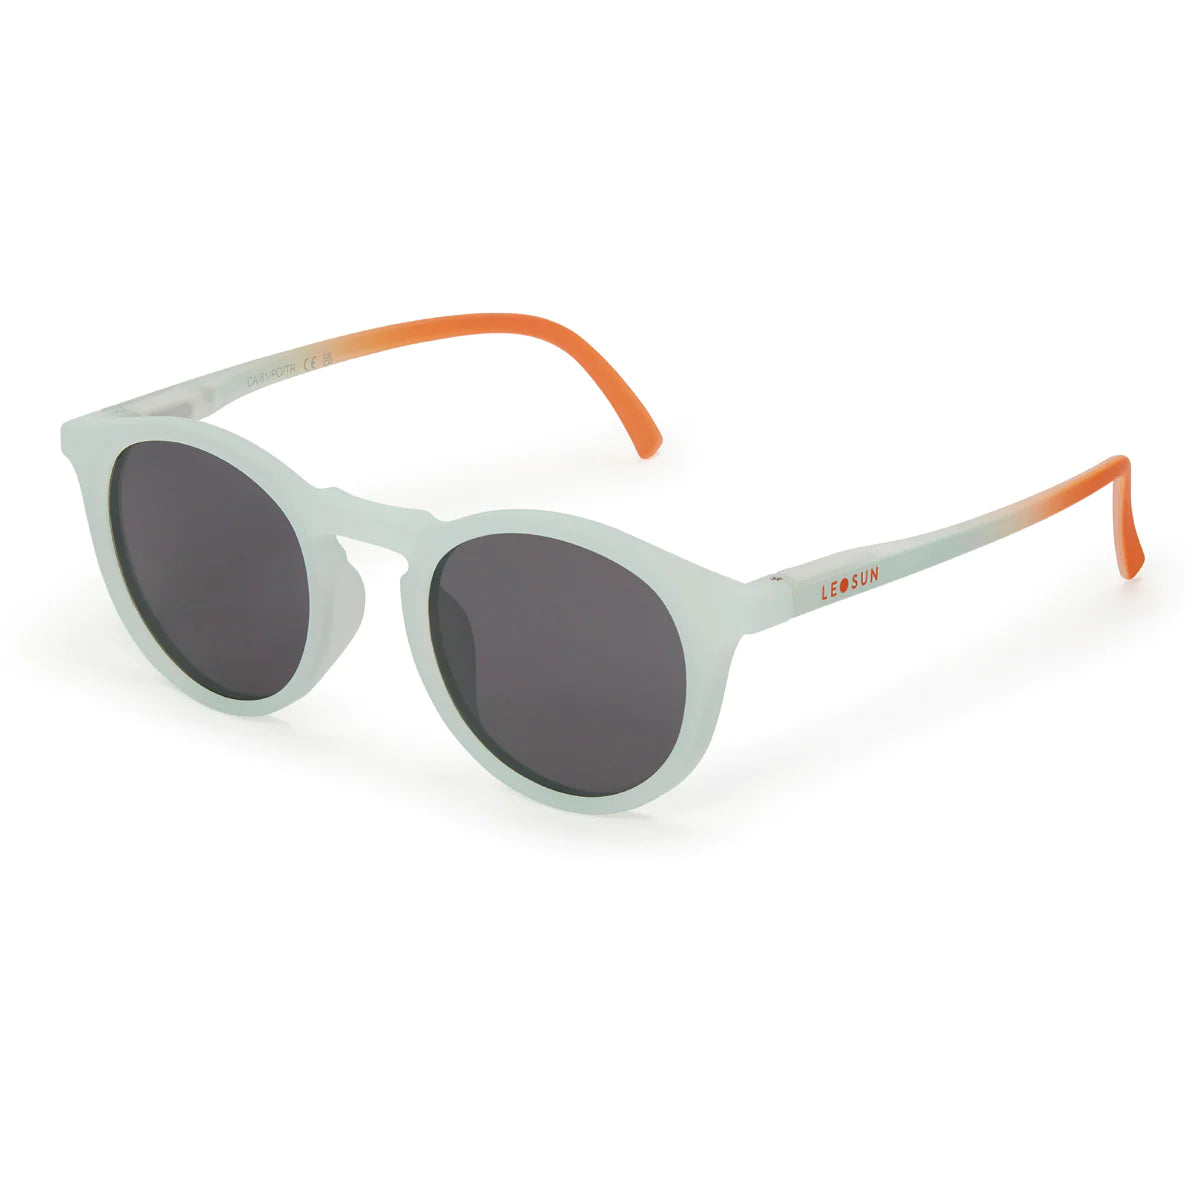 Leosun Polarised Kids Sunglasses